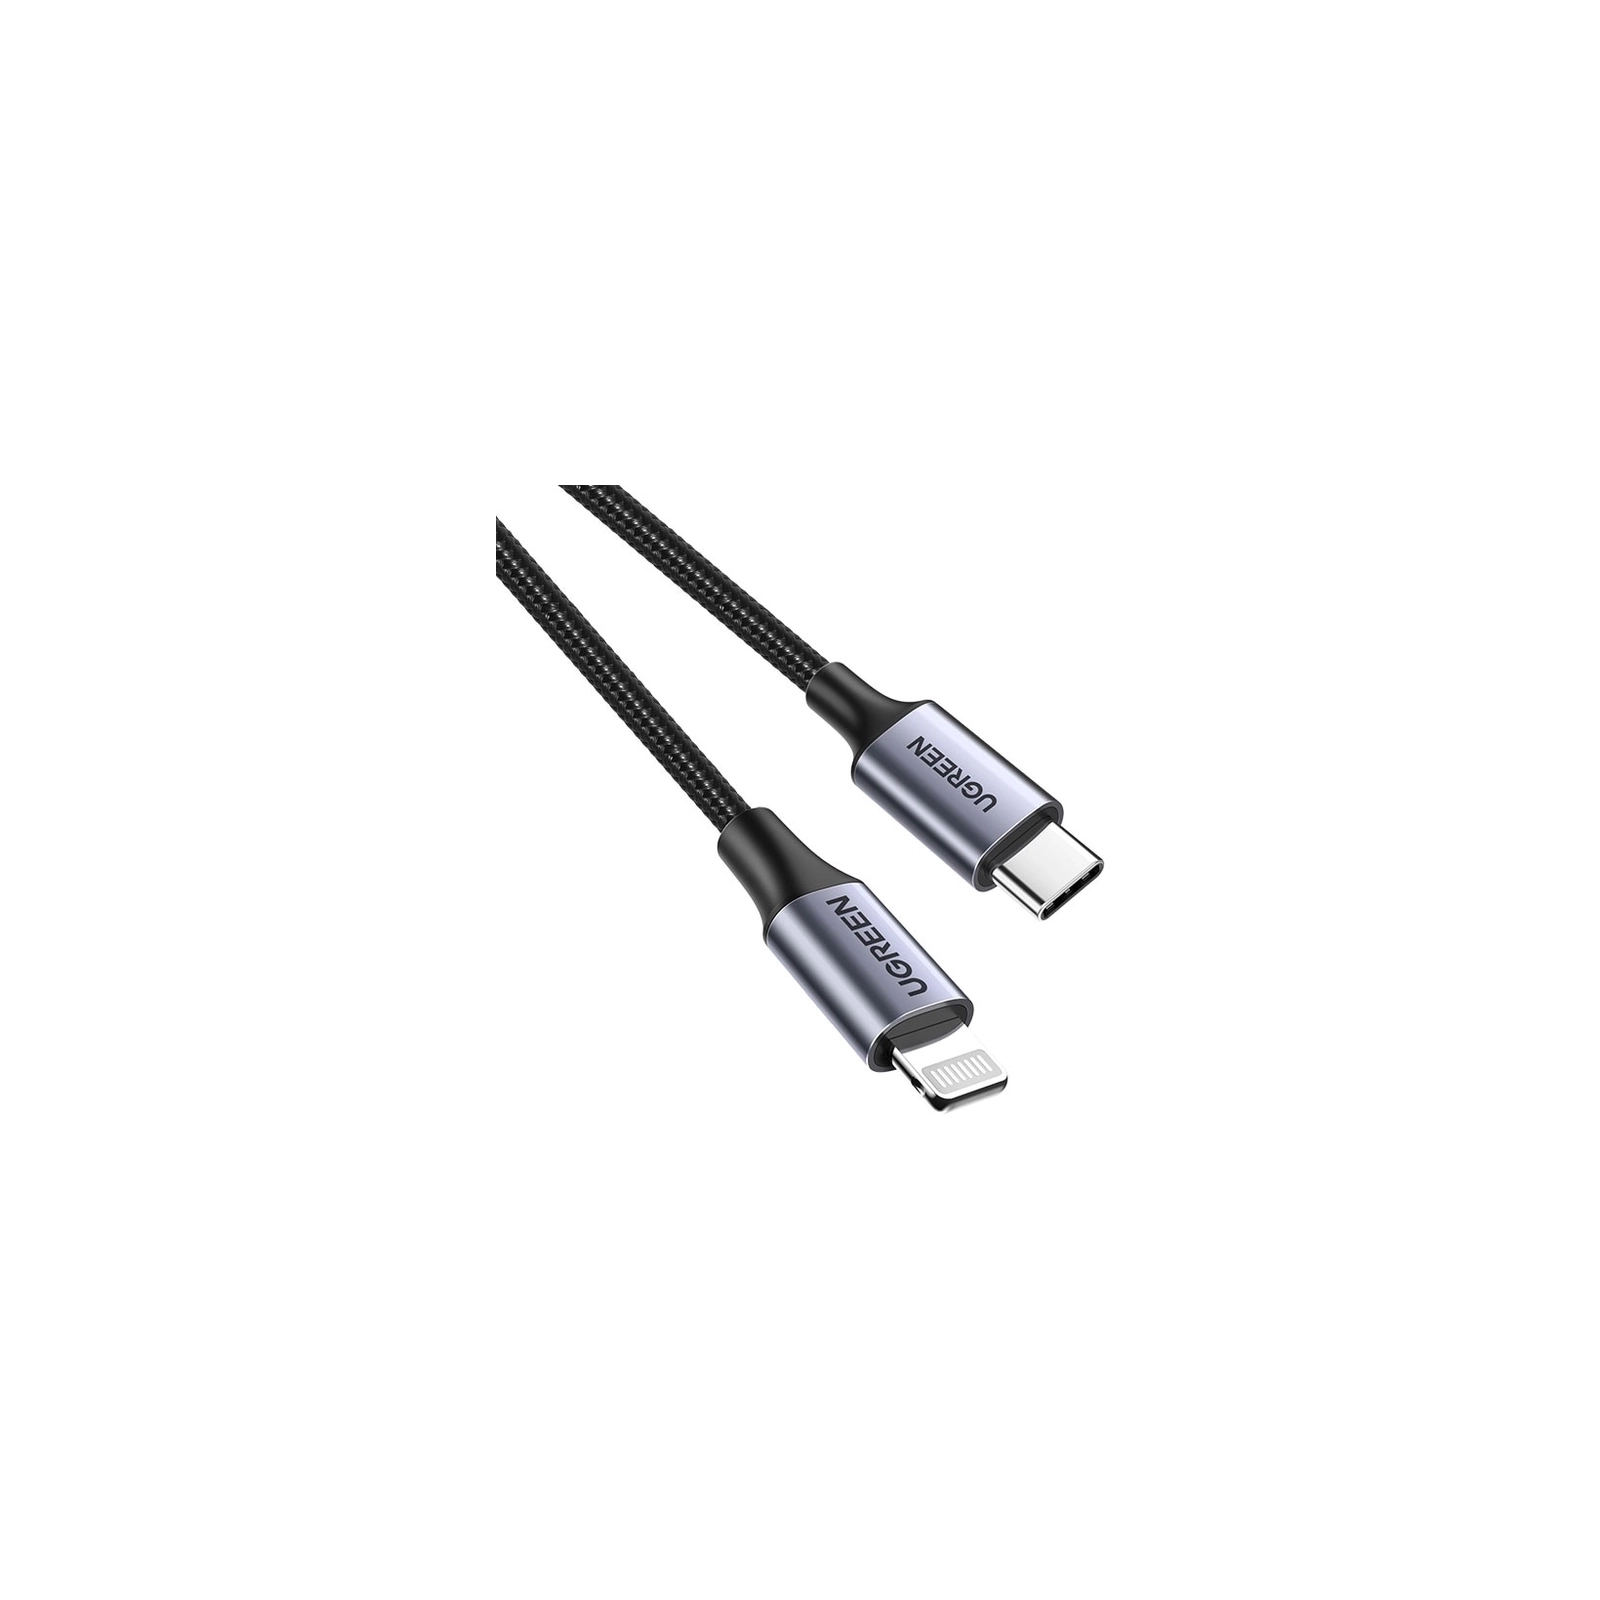 Дата кабель USB-C to Lightning 1.5m US304 MFI White Ugreen (US304/70524) изображение 2